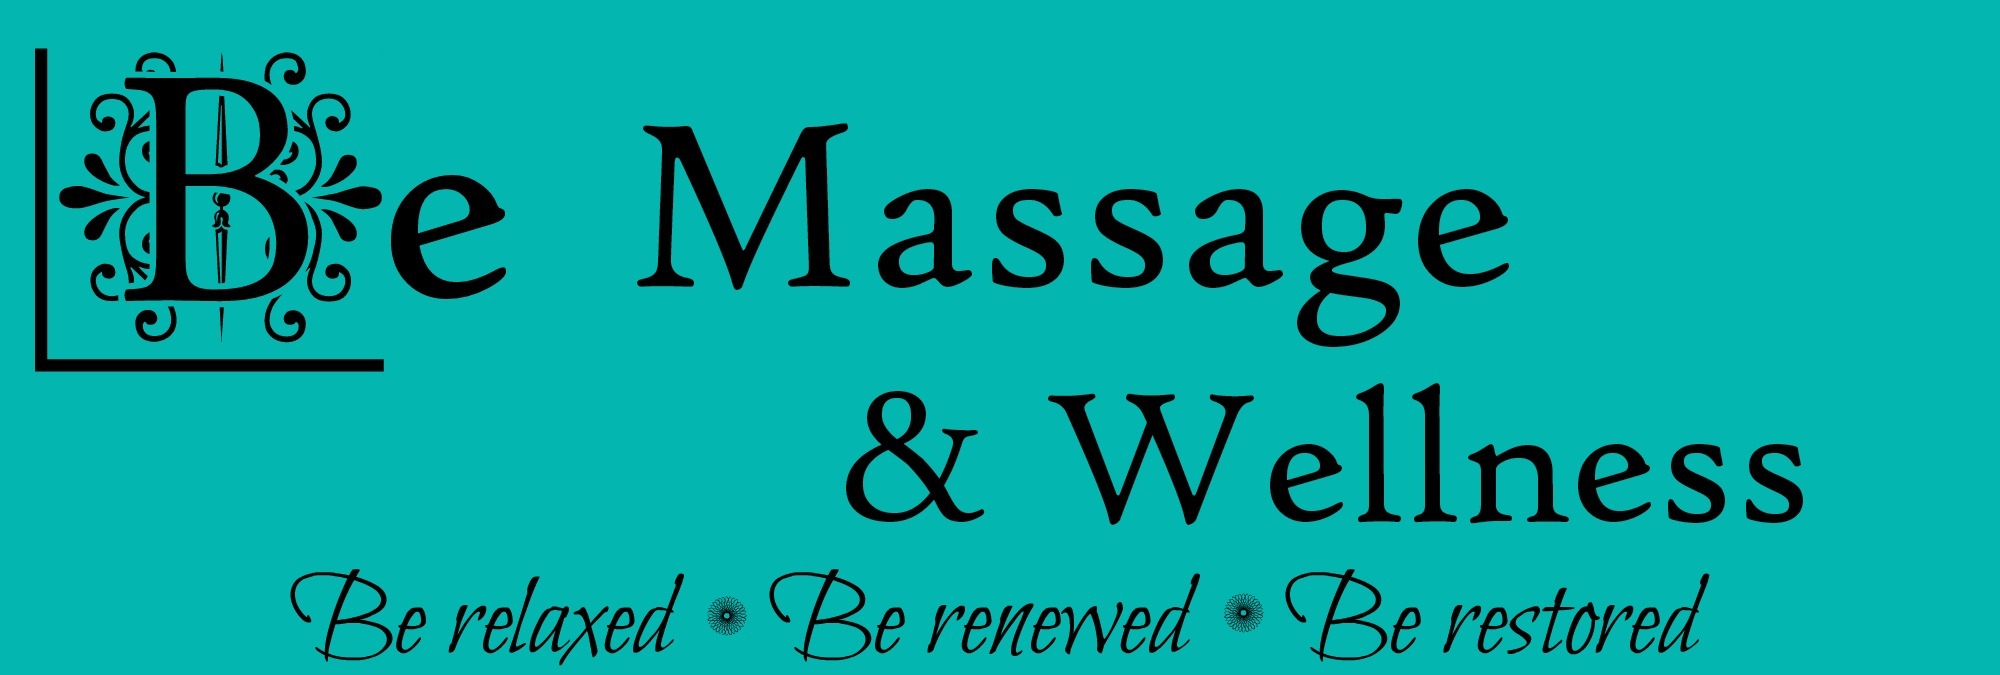 Be Massage & Wellness